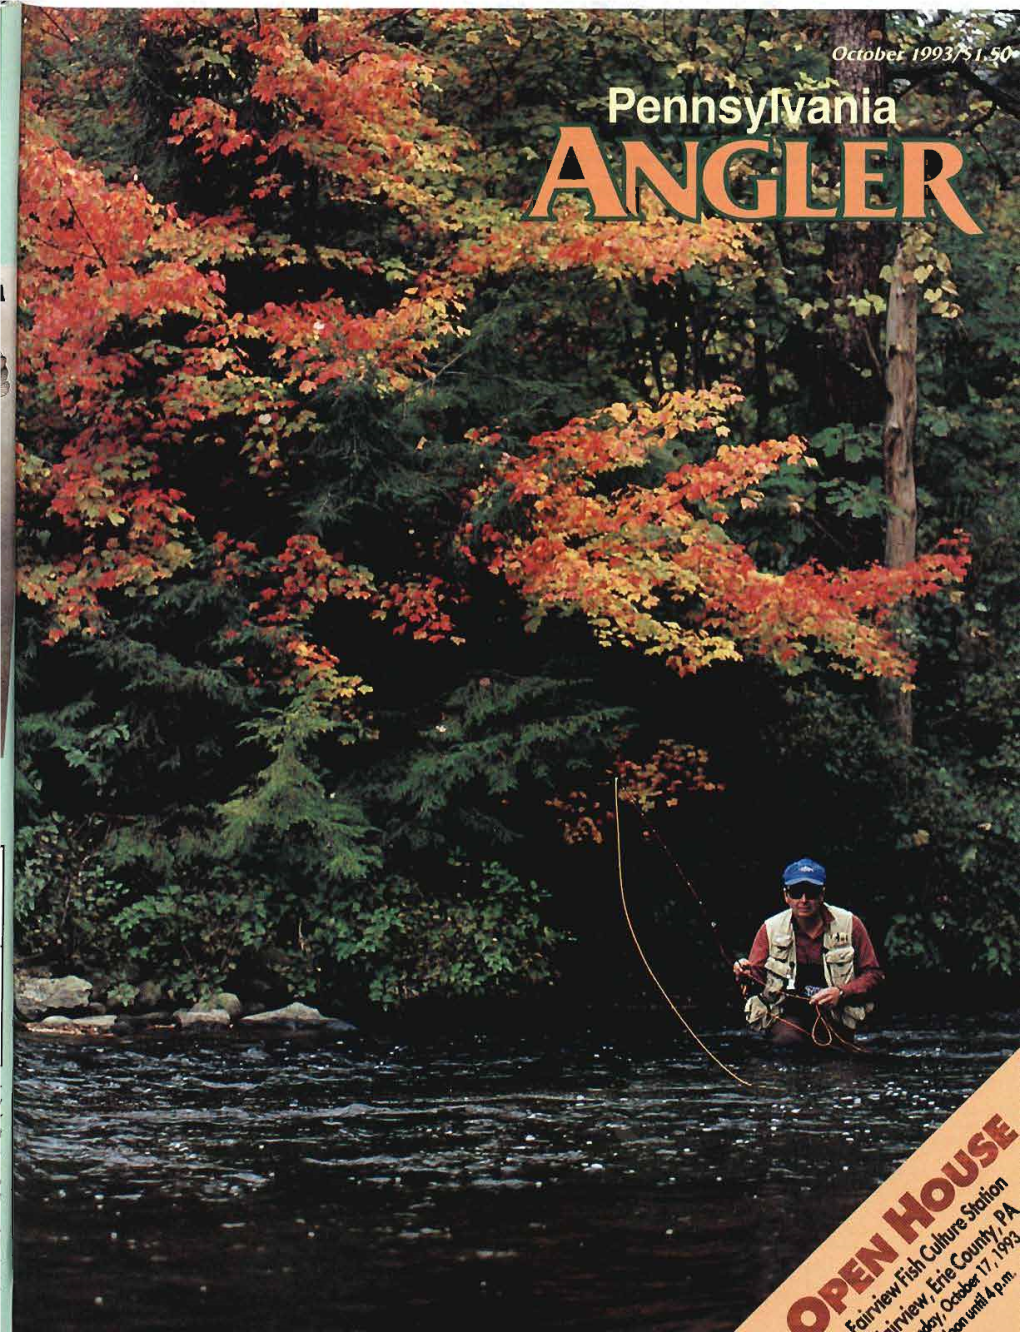 October 1993 Pennsylvania Angler October 1993 Vol 62 No